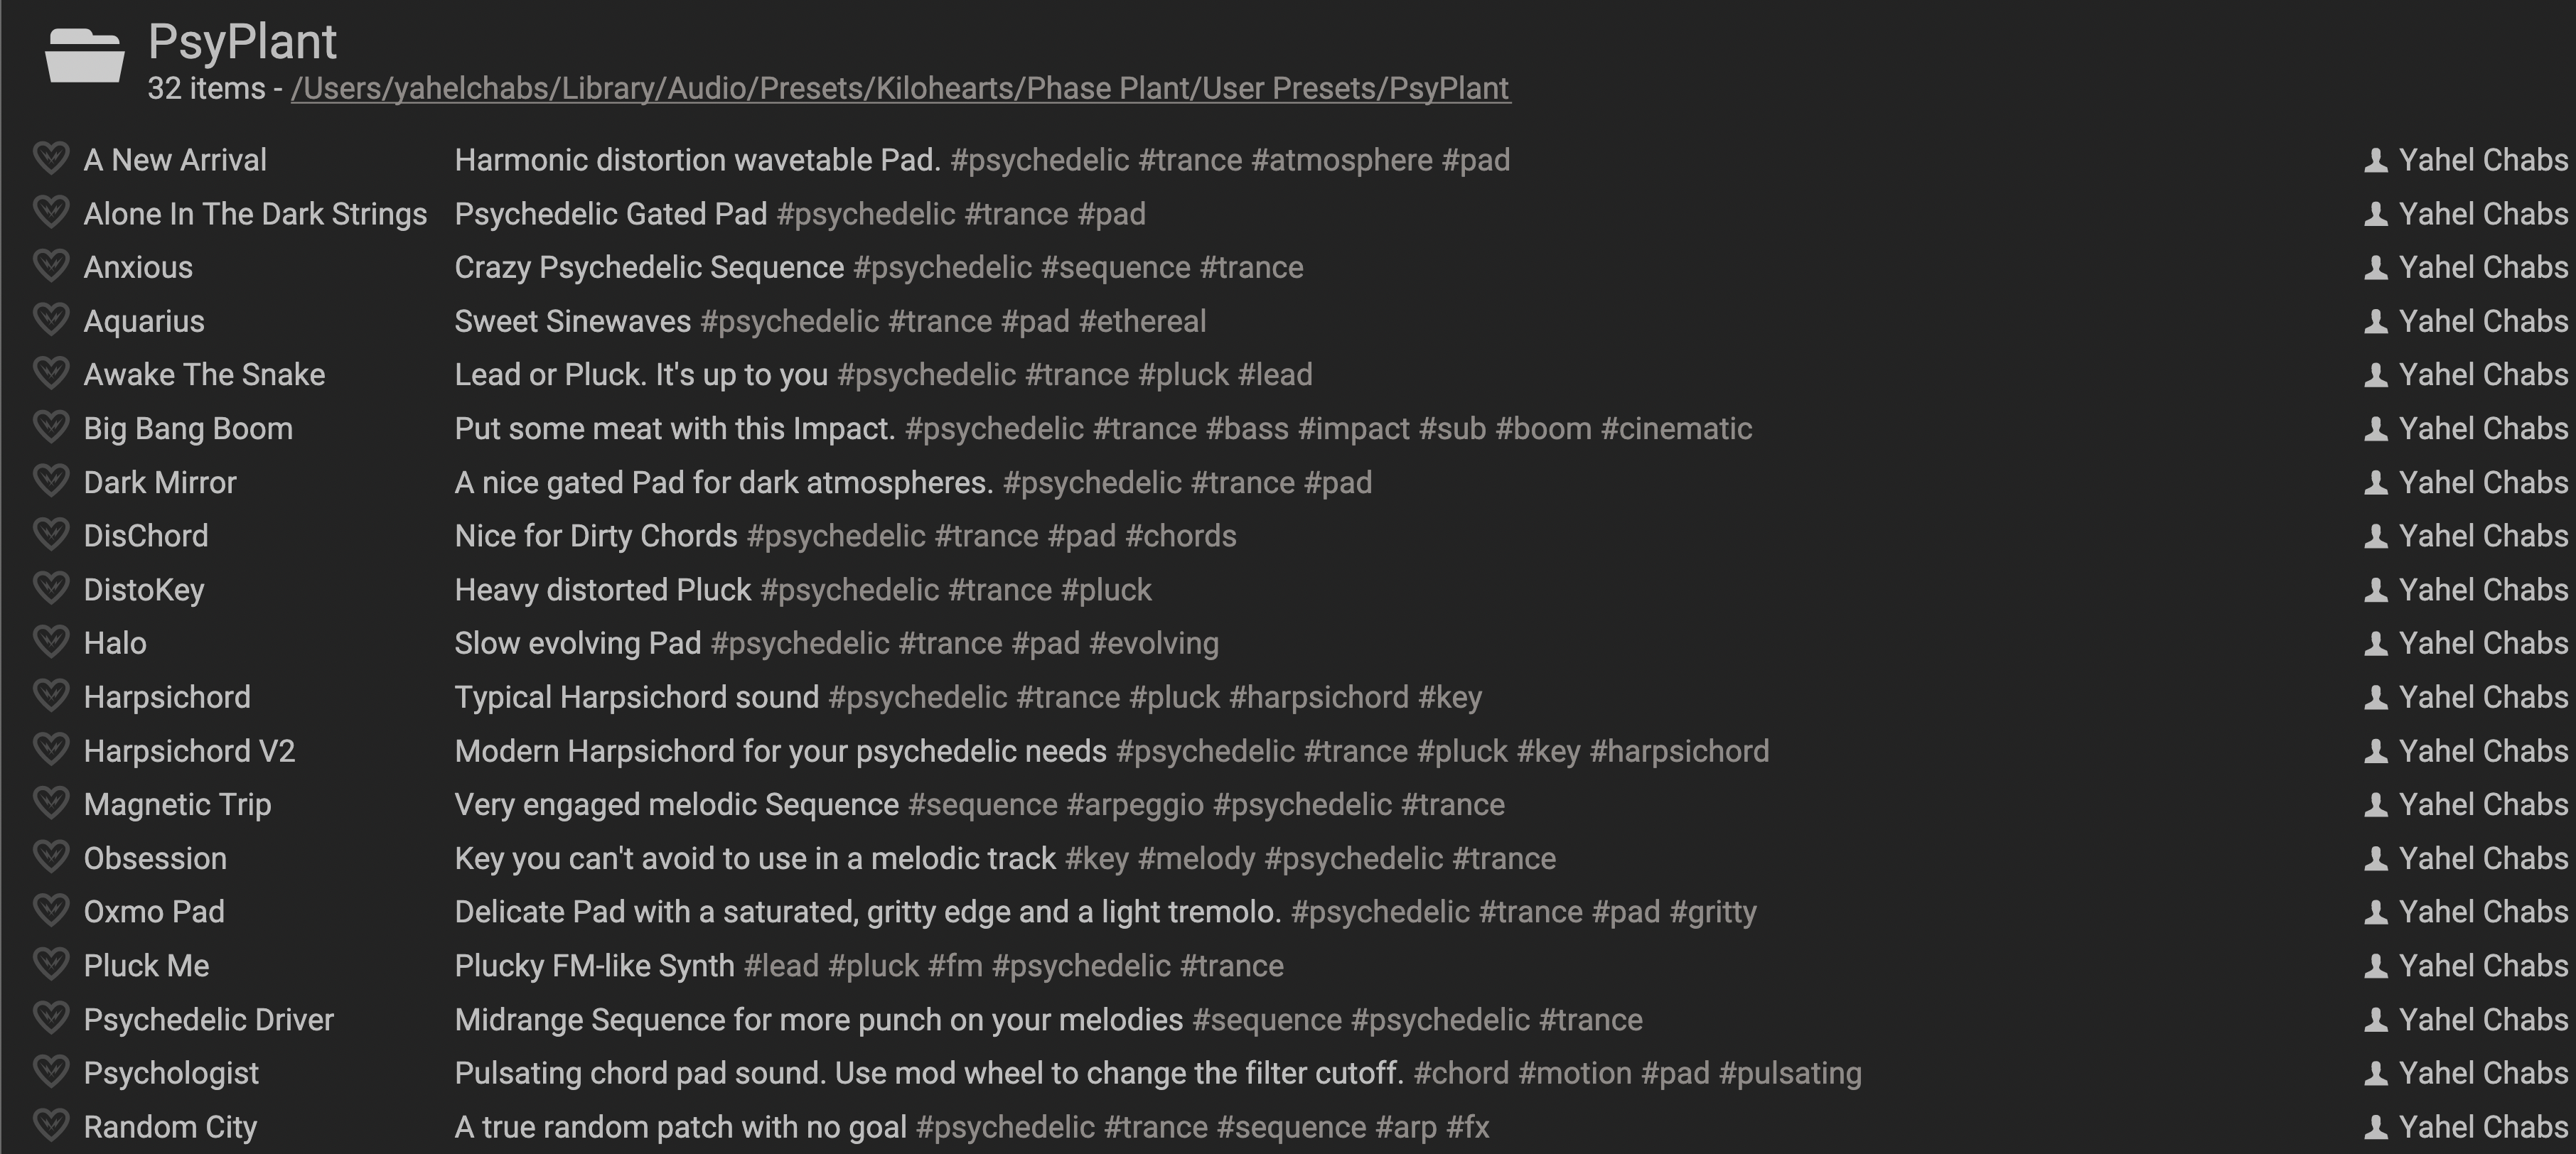 PsyPlant - Presets List #1